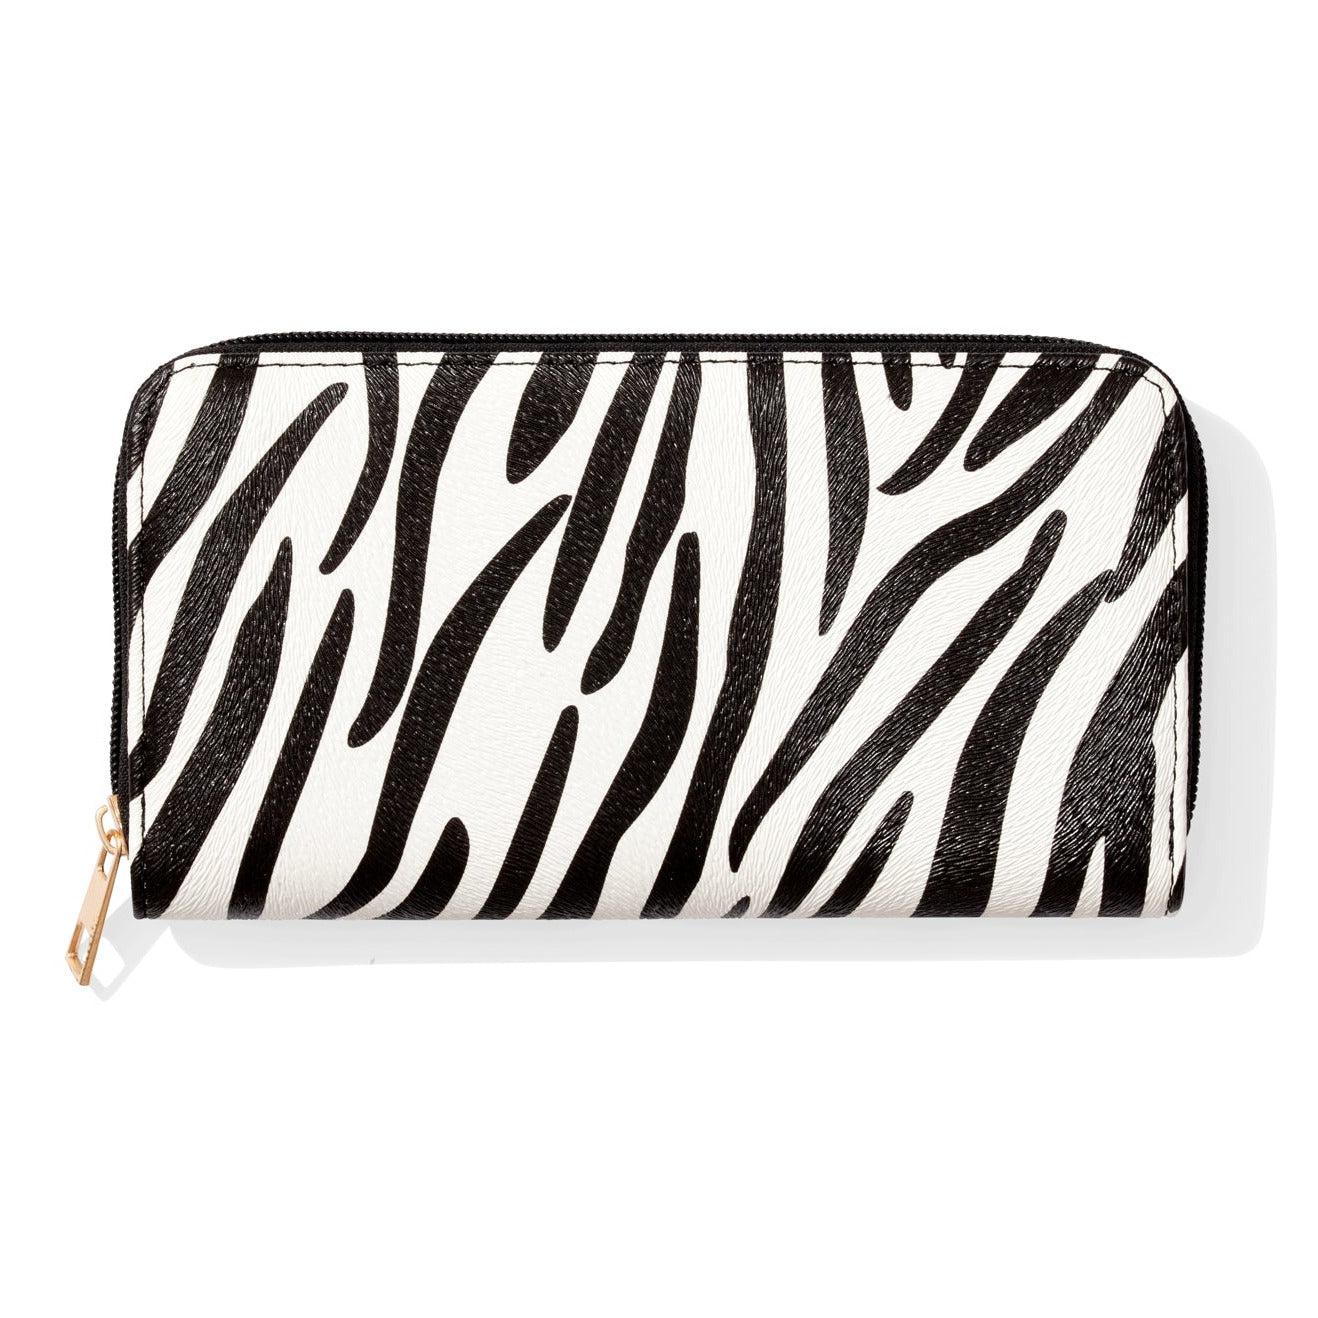 Zebra print zippered wallet with gold zips